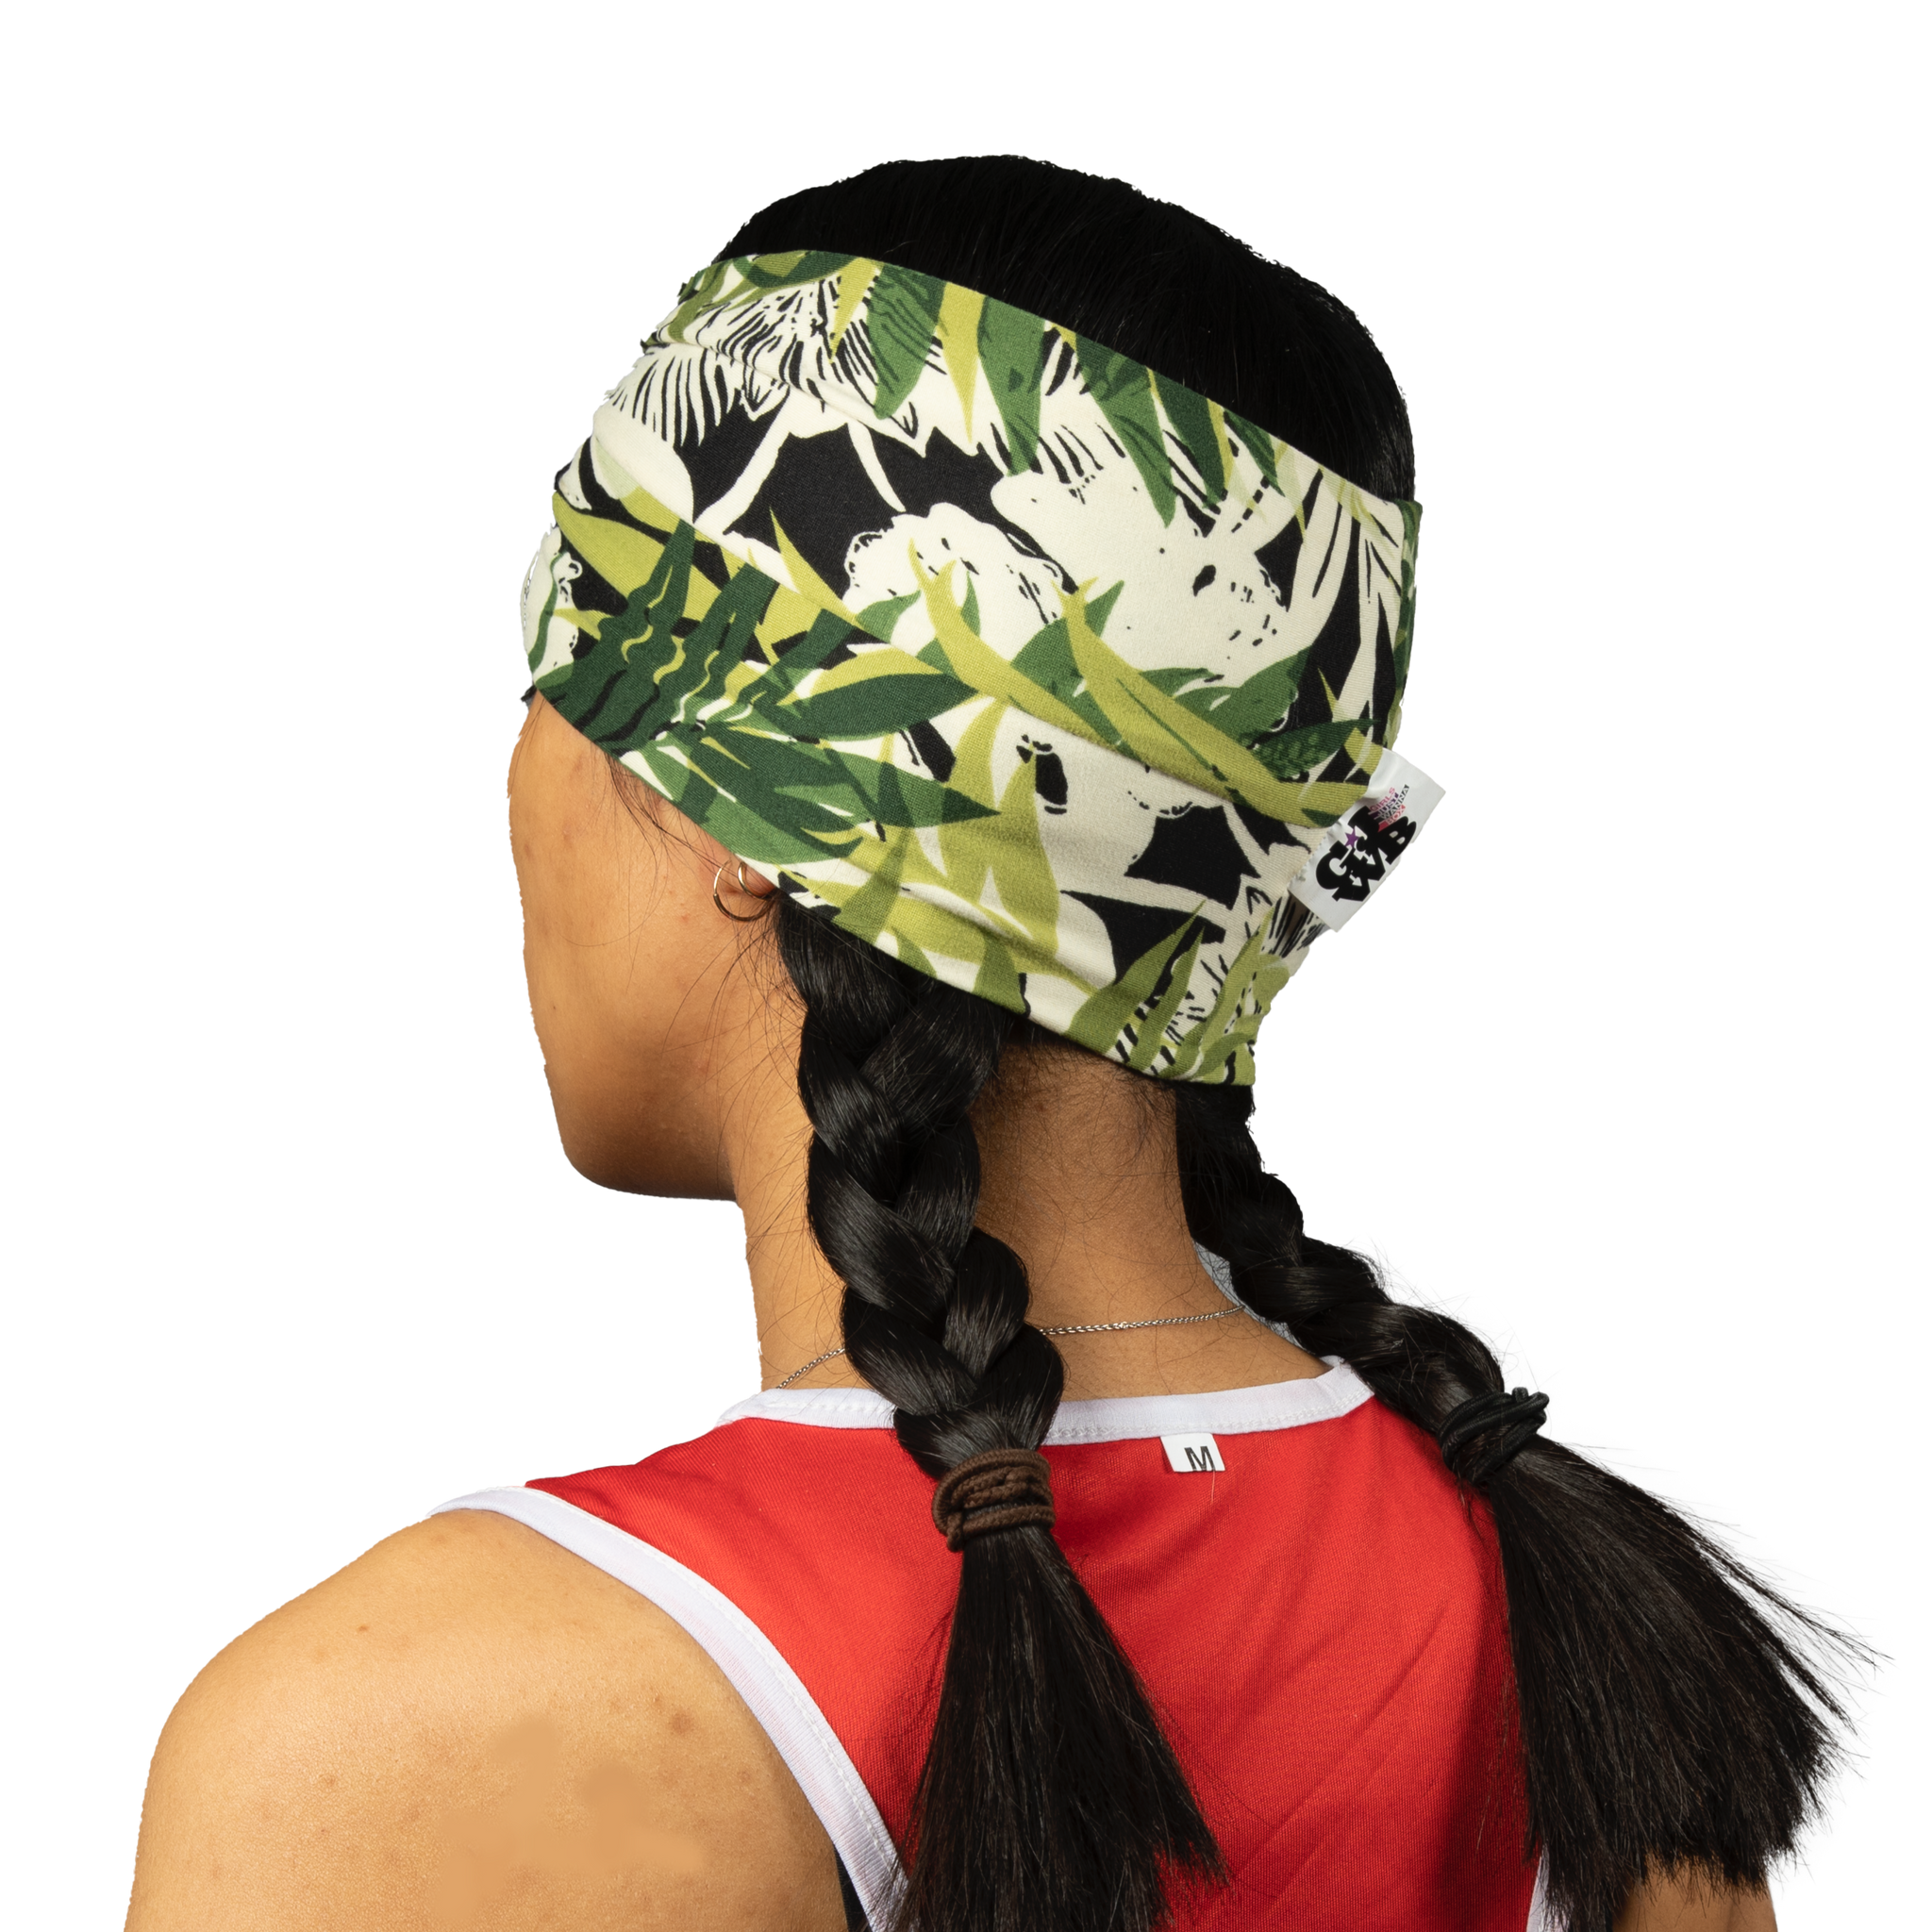 Athletic headband with a leaf design